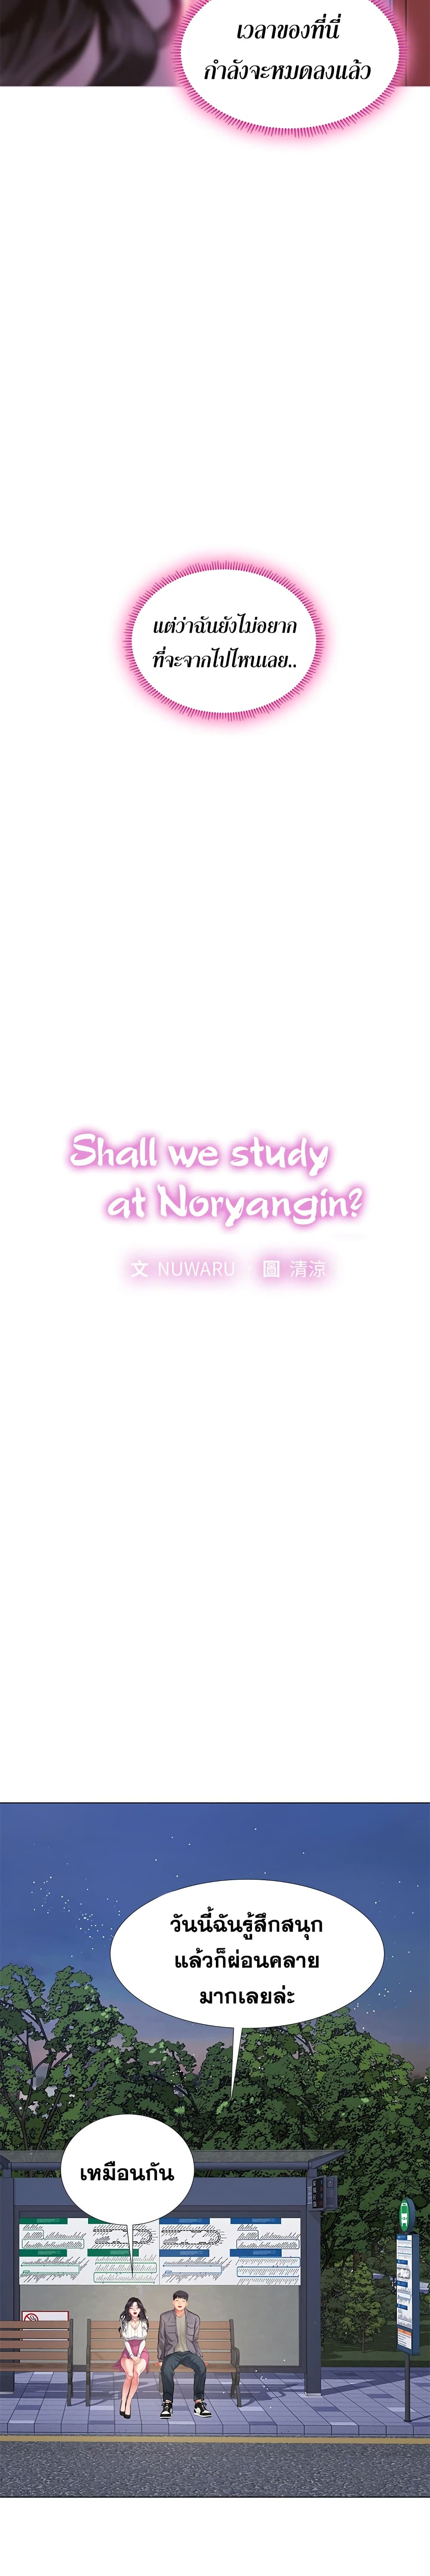 Should I Study at Noryangjin 73 04